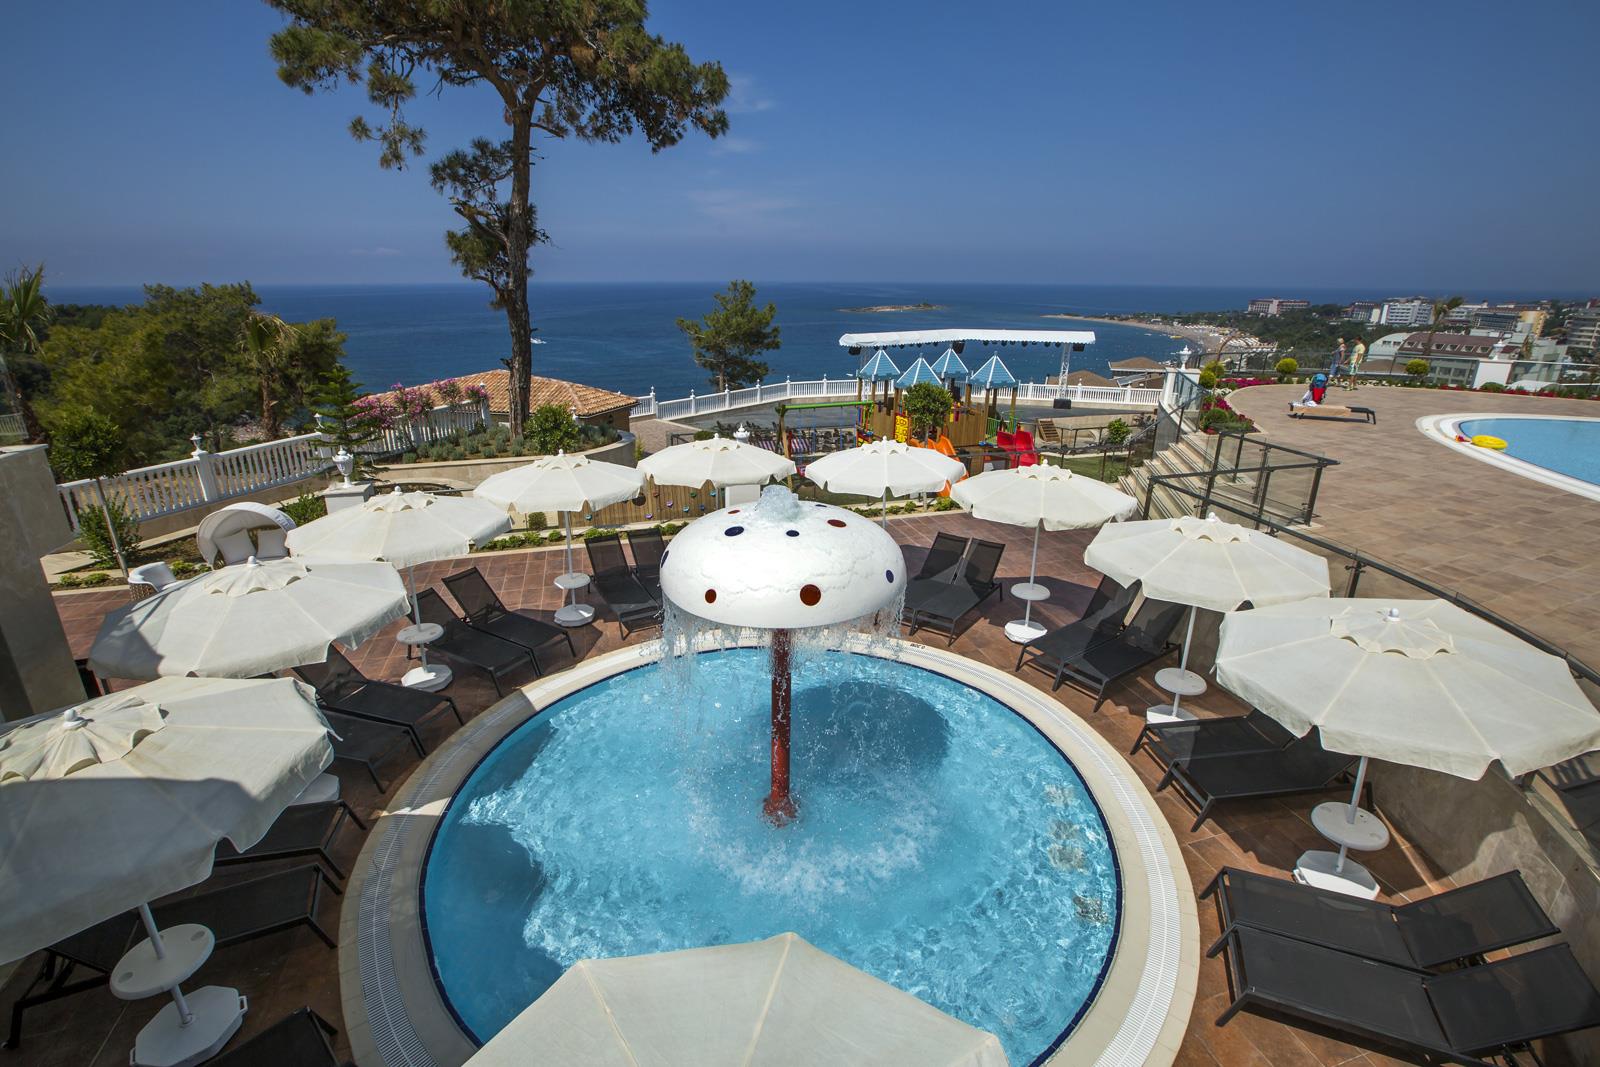 Litore Resort Hotel & Spa 5*